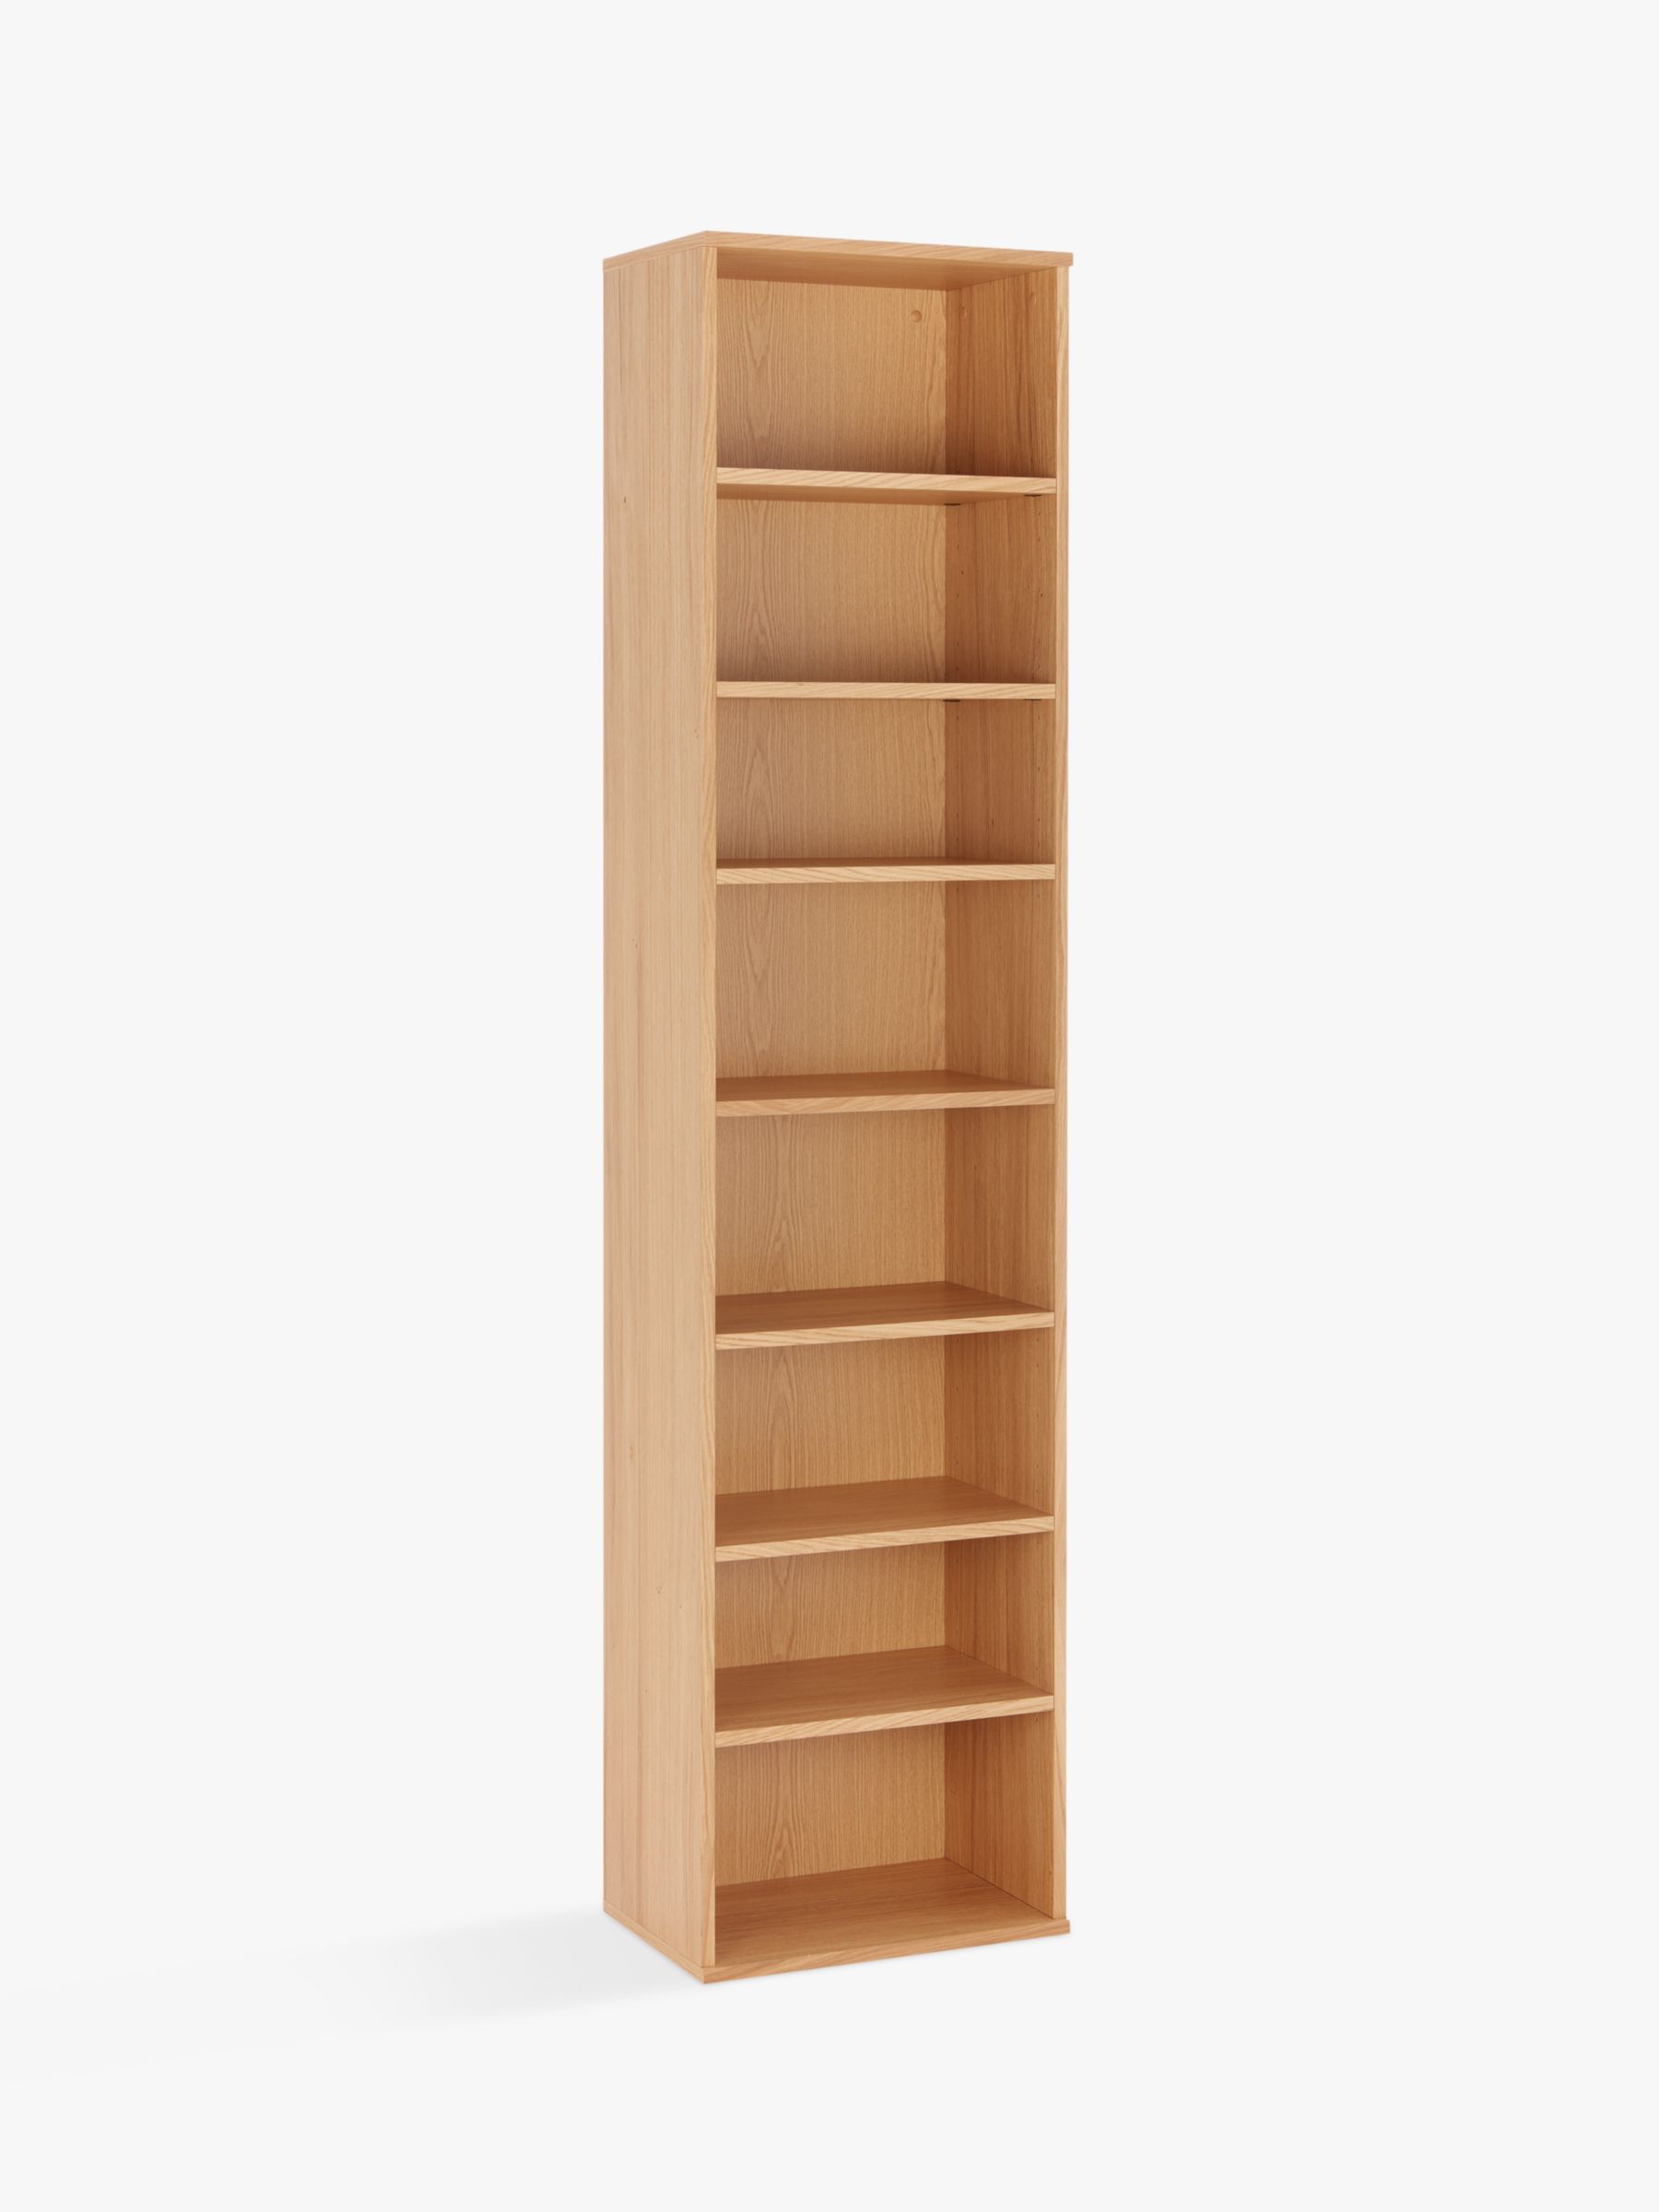 Photo of John lewis abacus narrow 7 shelf bookcase fsc-certified -oak veneer-